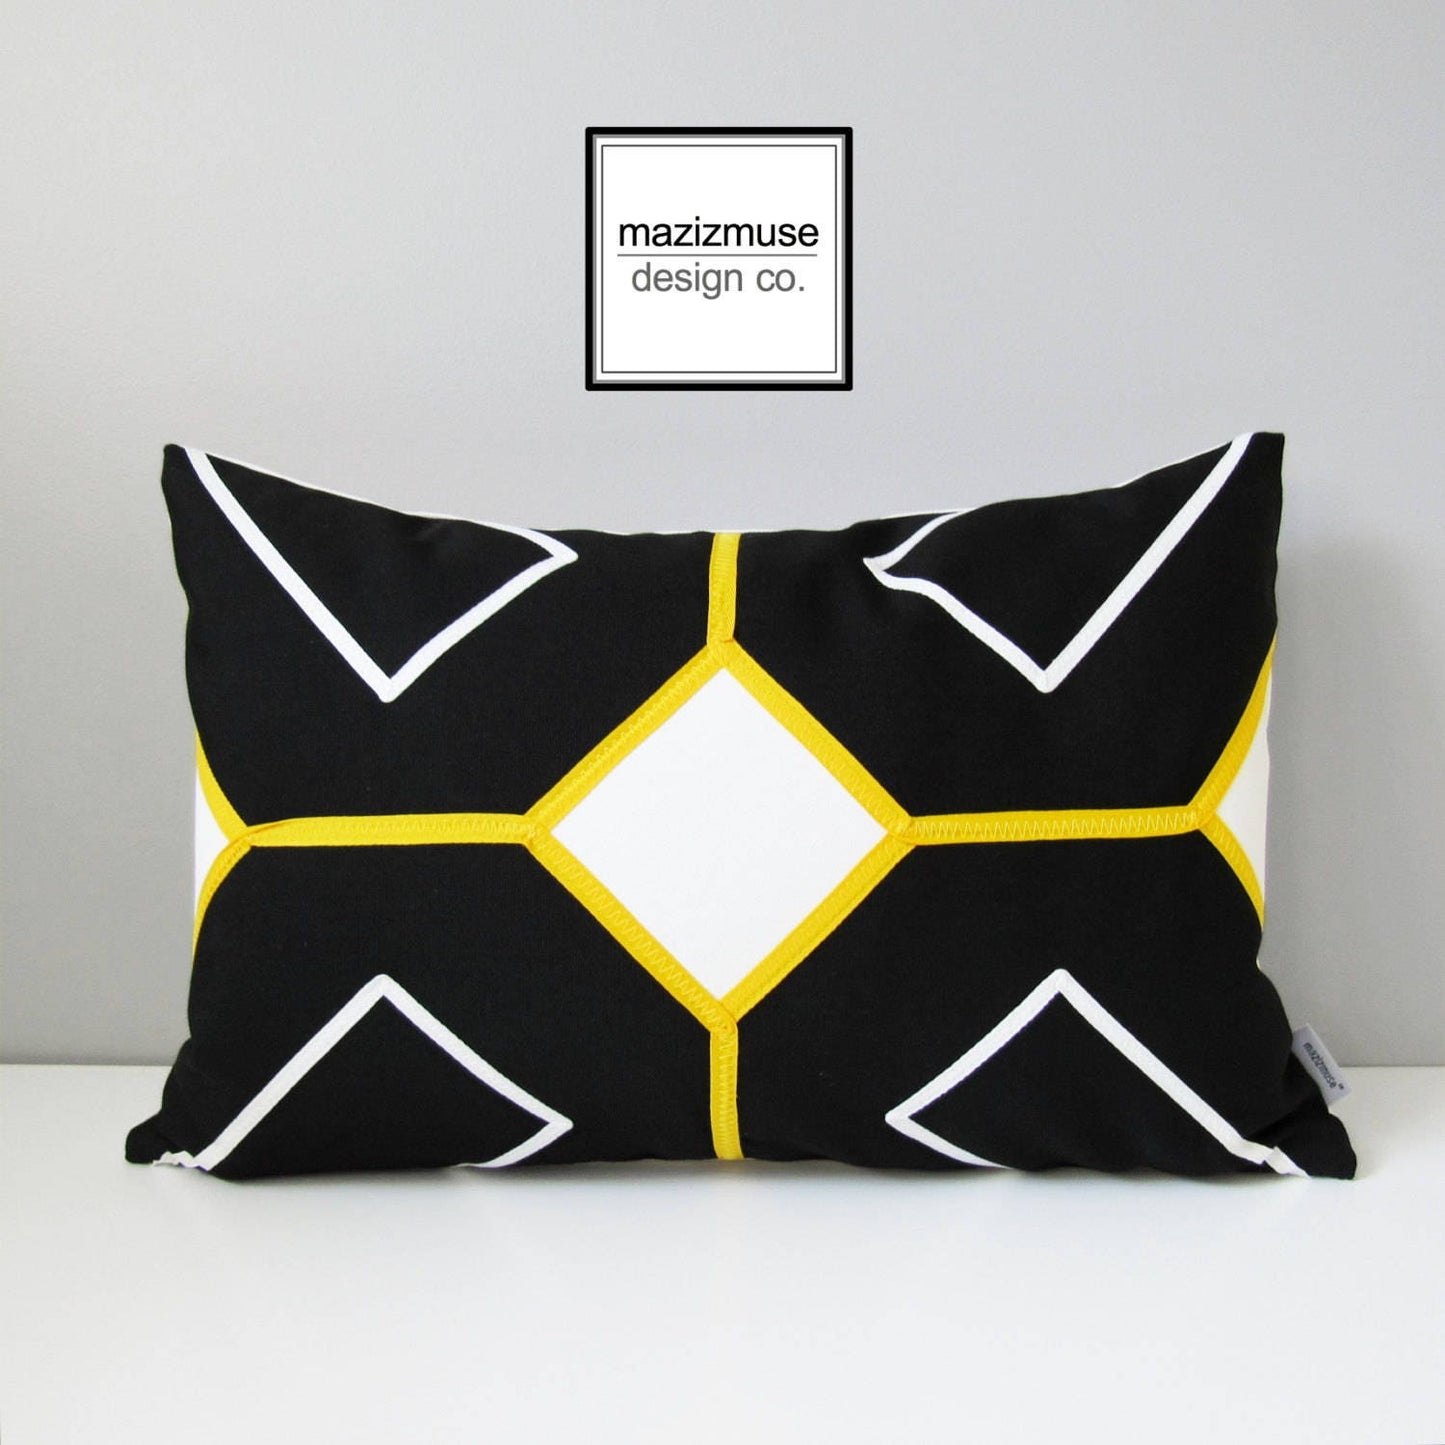 Black & White Sunbrella Cushion With Yellow Geometric Trim